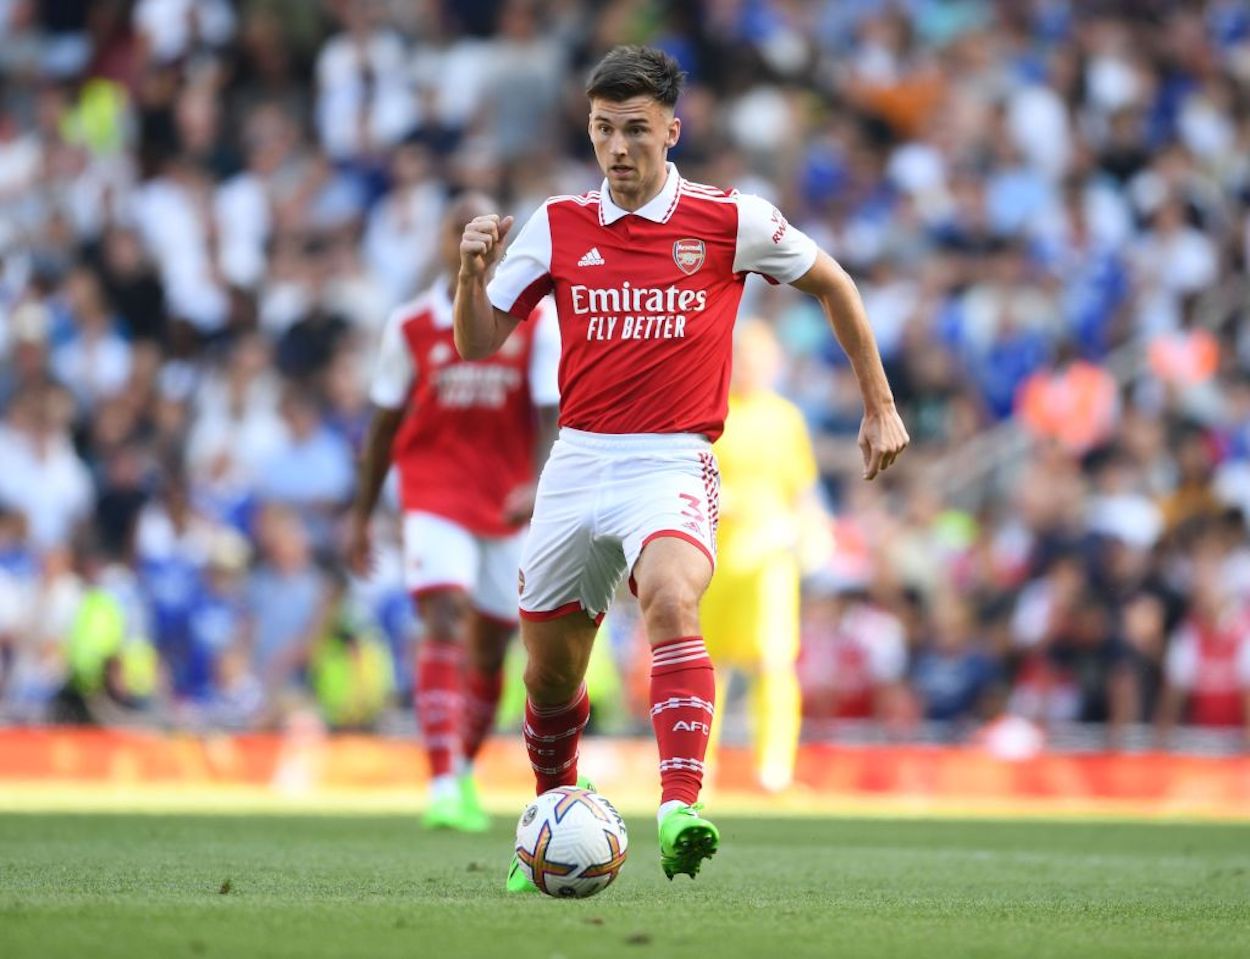 Arsenal left-backKieran Tierney dribbles the ball during a Premier League match.